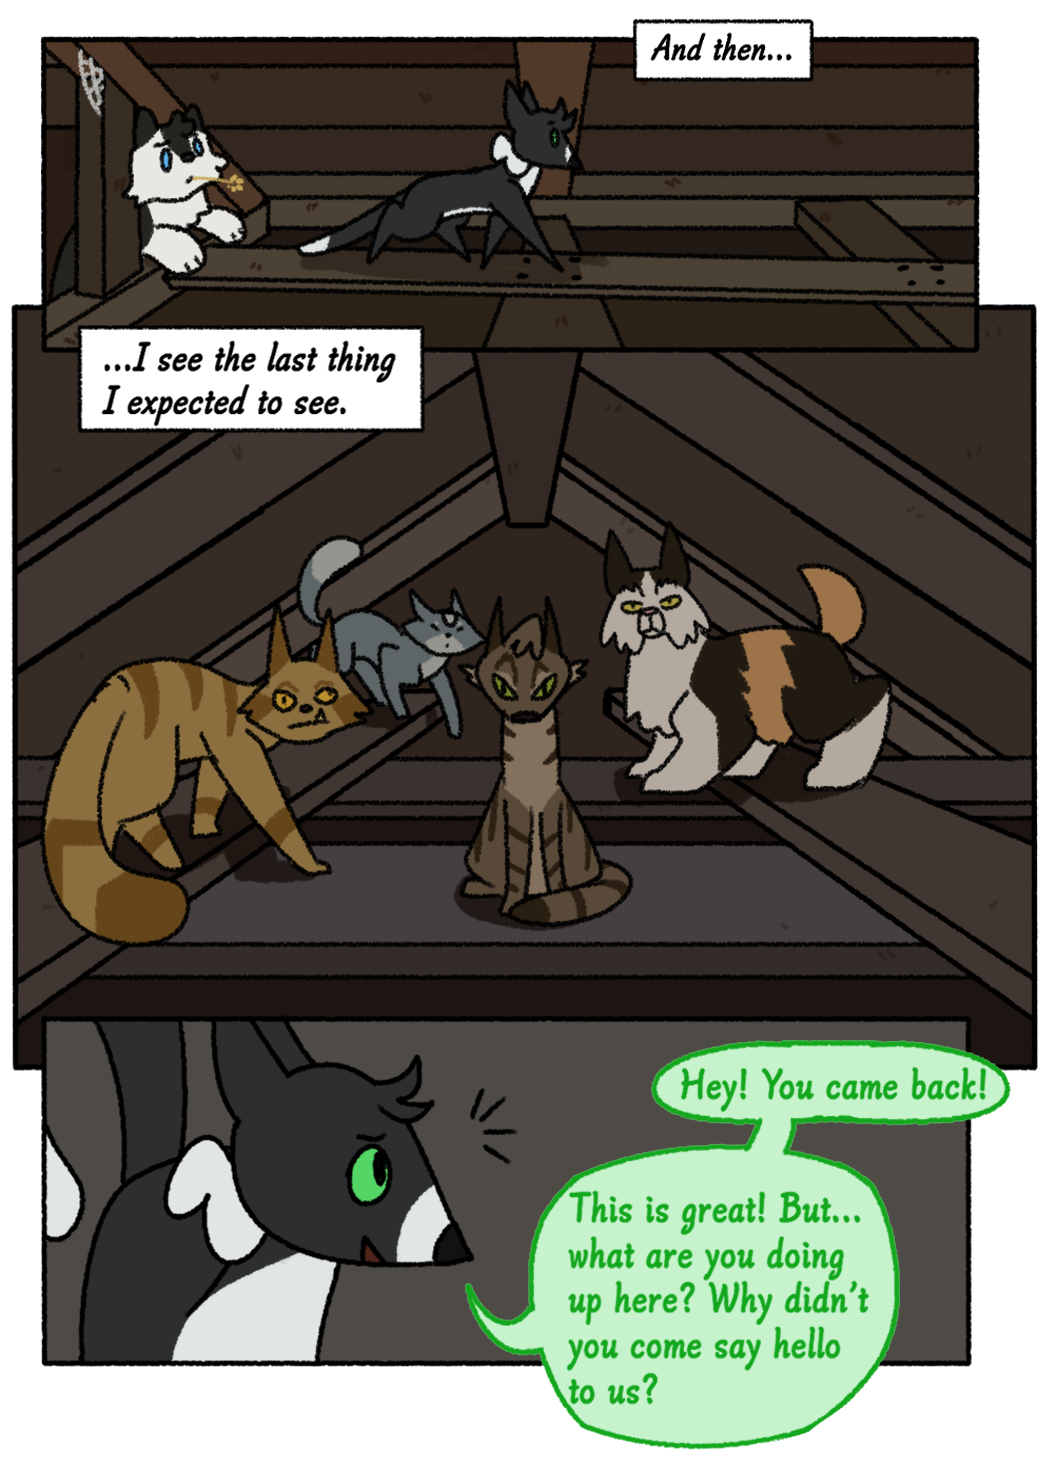 warriors cat stuff — falkarth-art: A quick Ravenpaw, perhaps he's